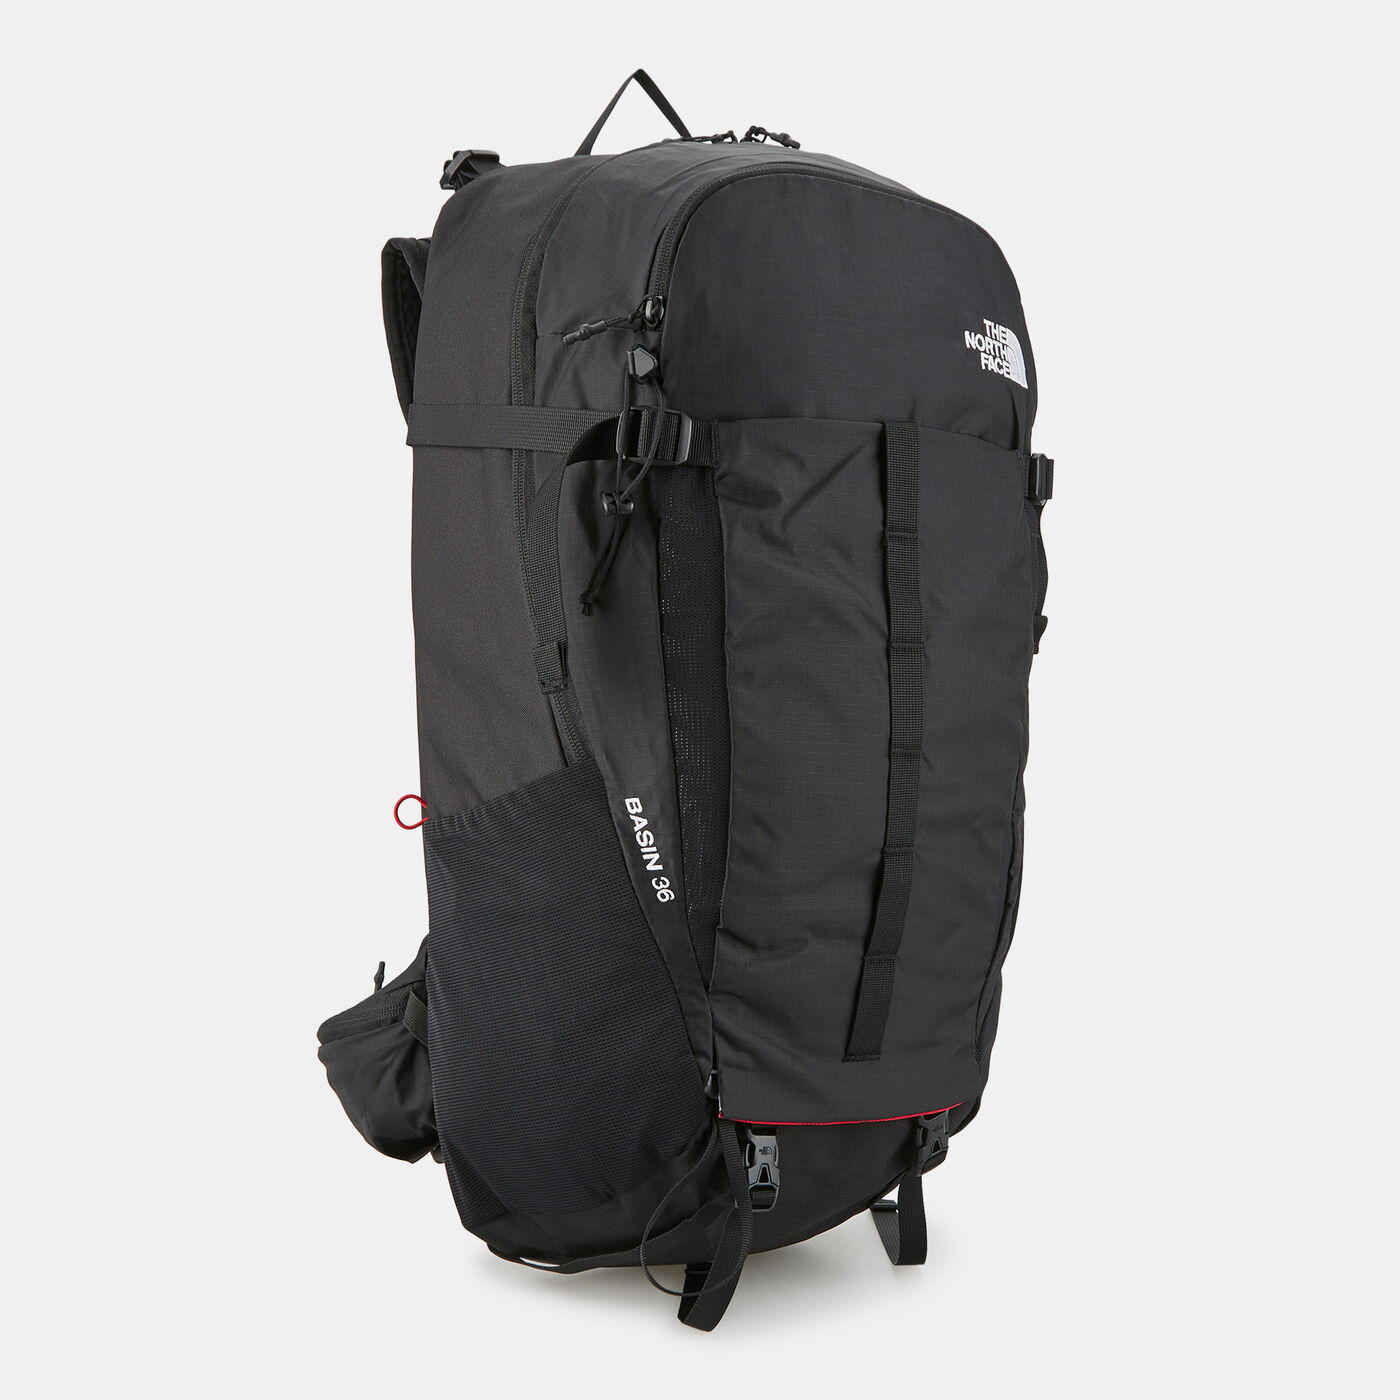 Basin 36 Backpack